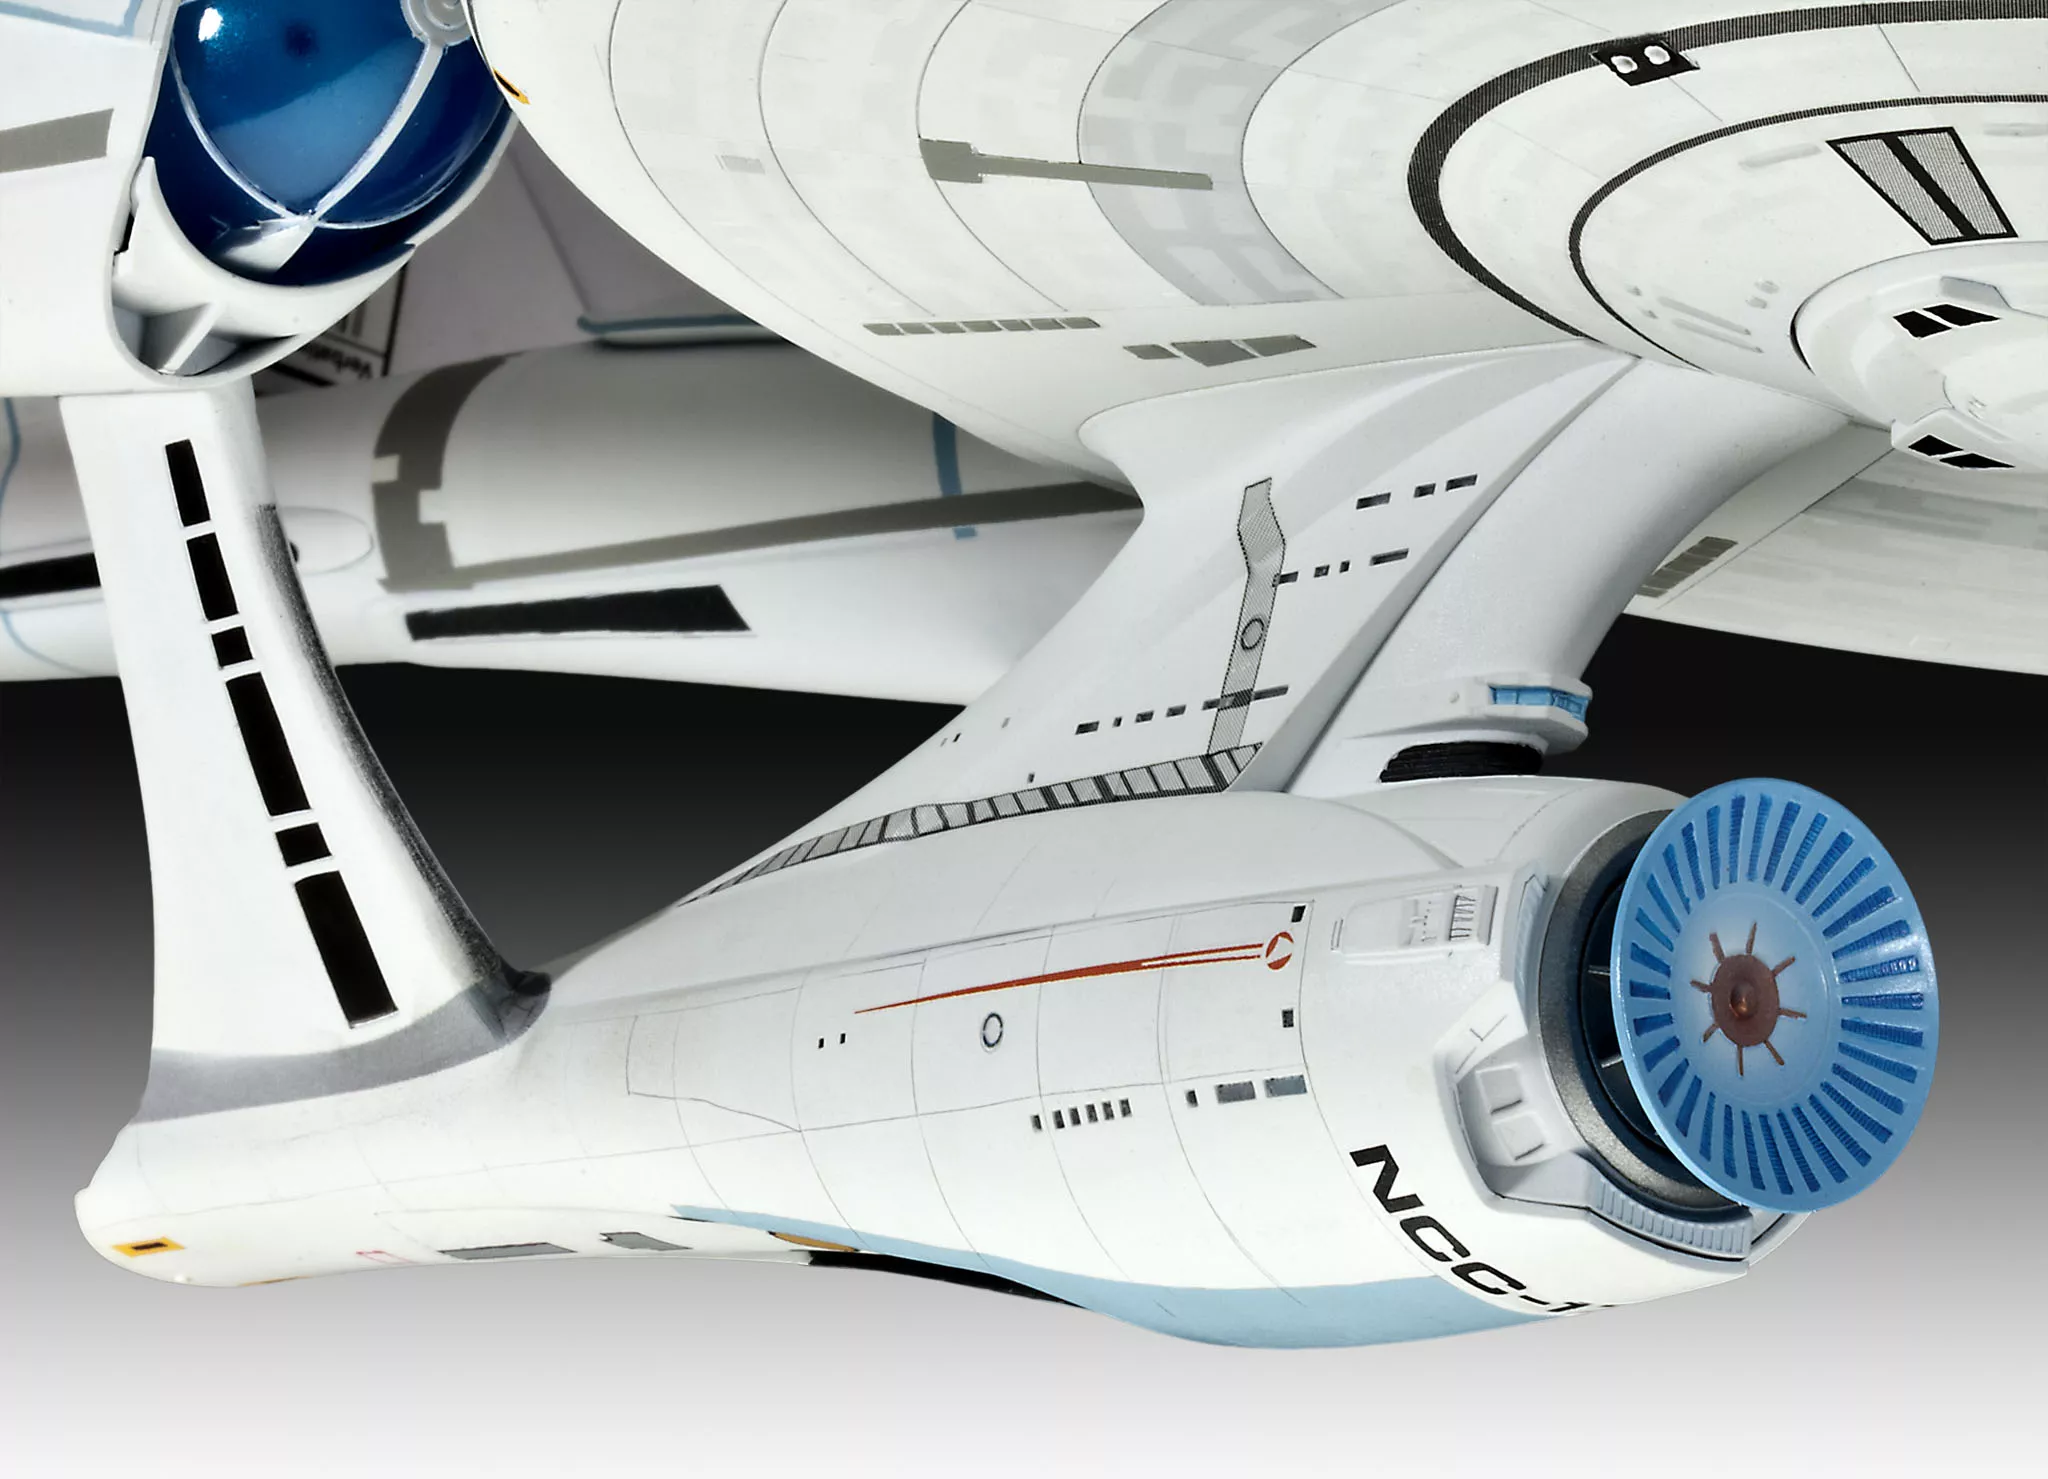 Revell 04882 Star Trek Into Darkness USS Enterprise Modellbausatz